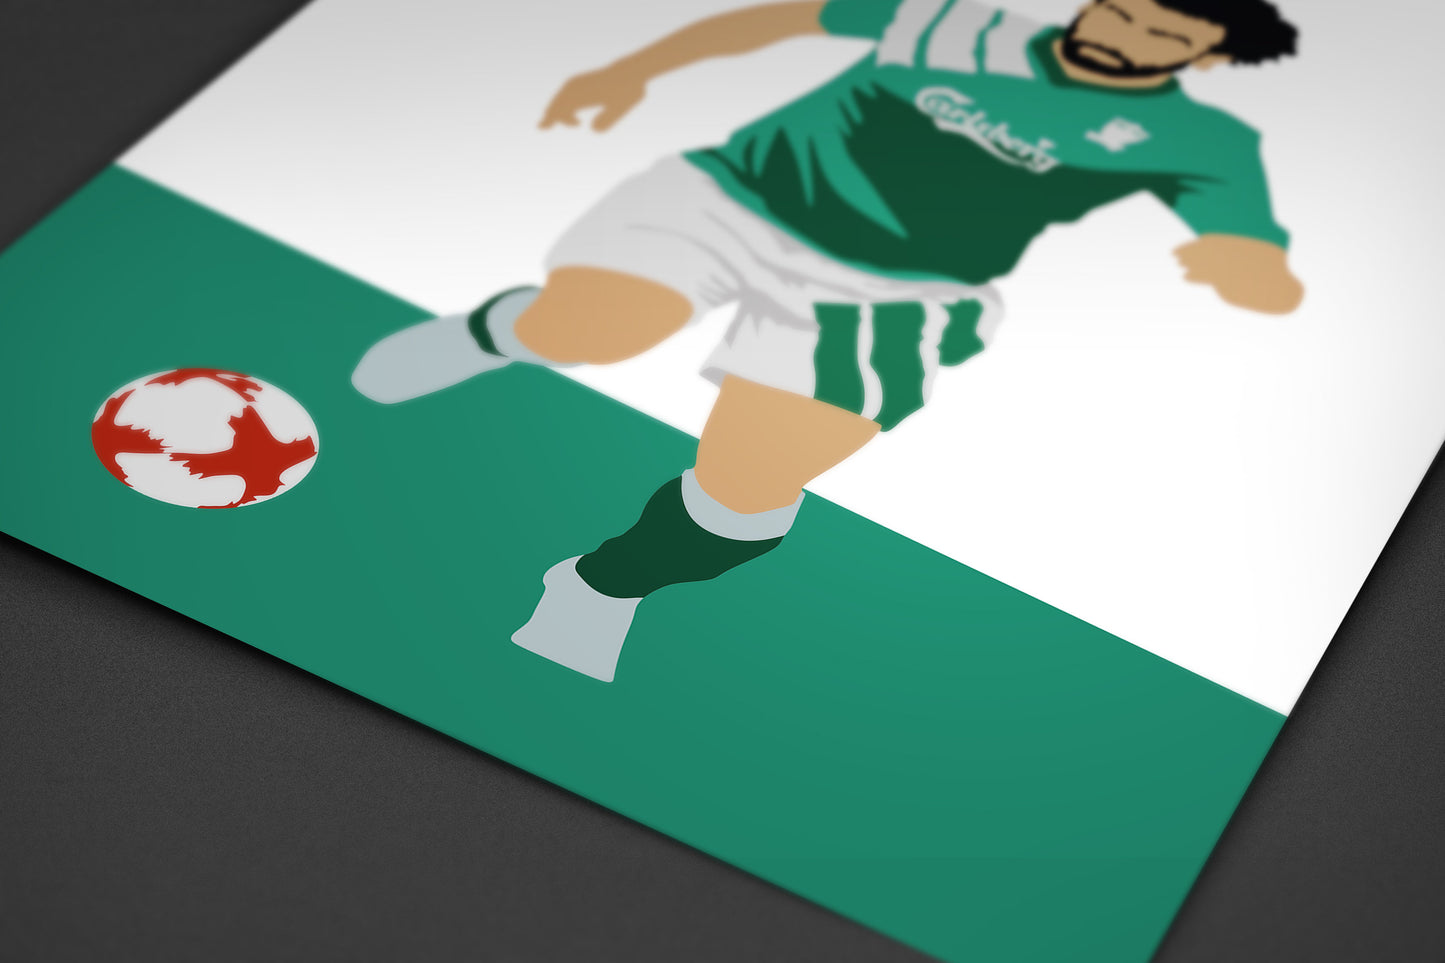 Mo #11 Classic Kit Football Print \ Minimalist Art Print Poster Gift Idea For Him \ Soccer \ Gift for Husband Boyfriend